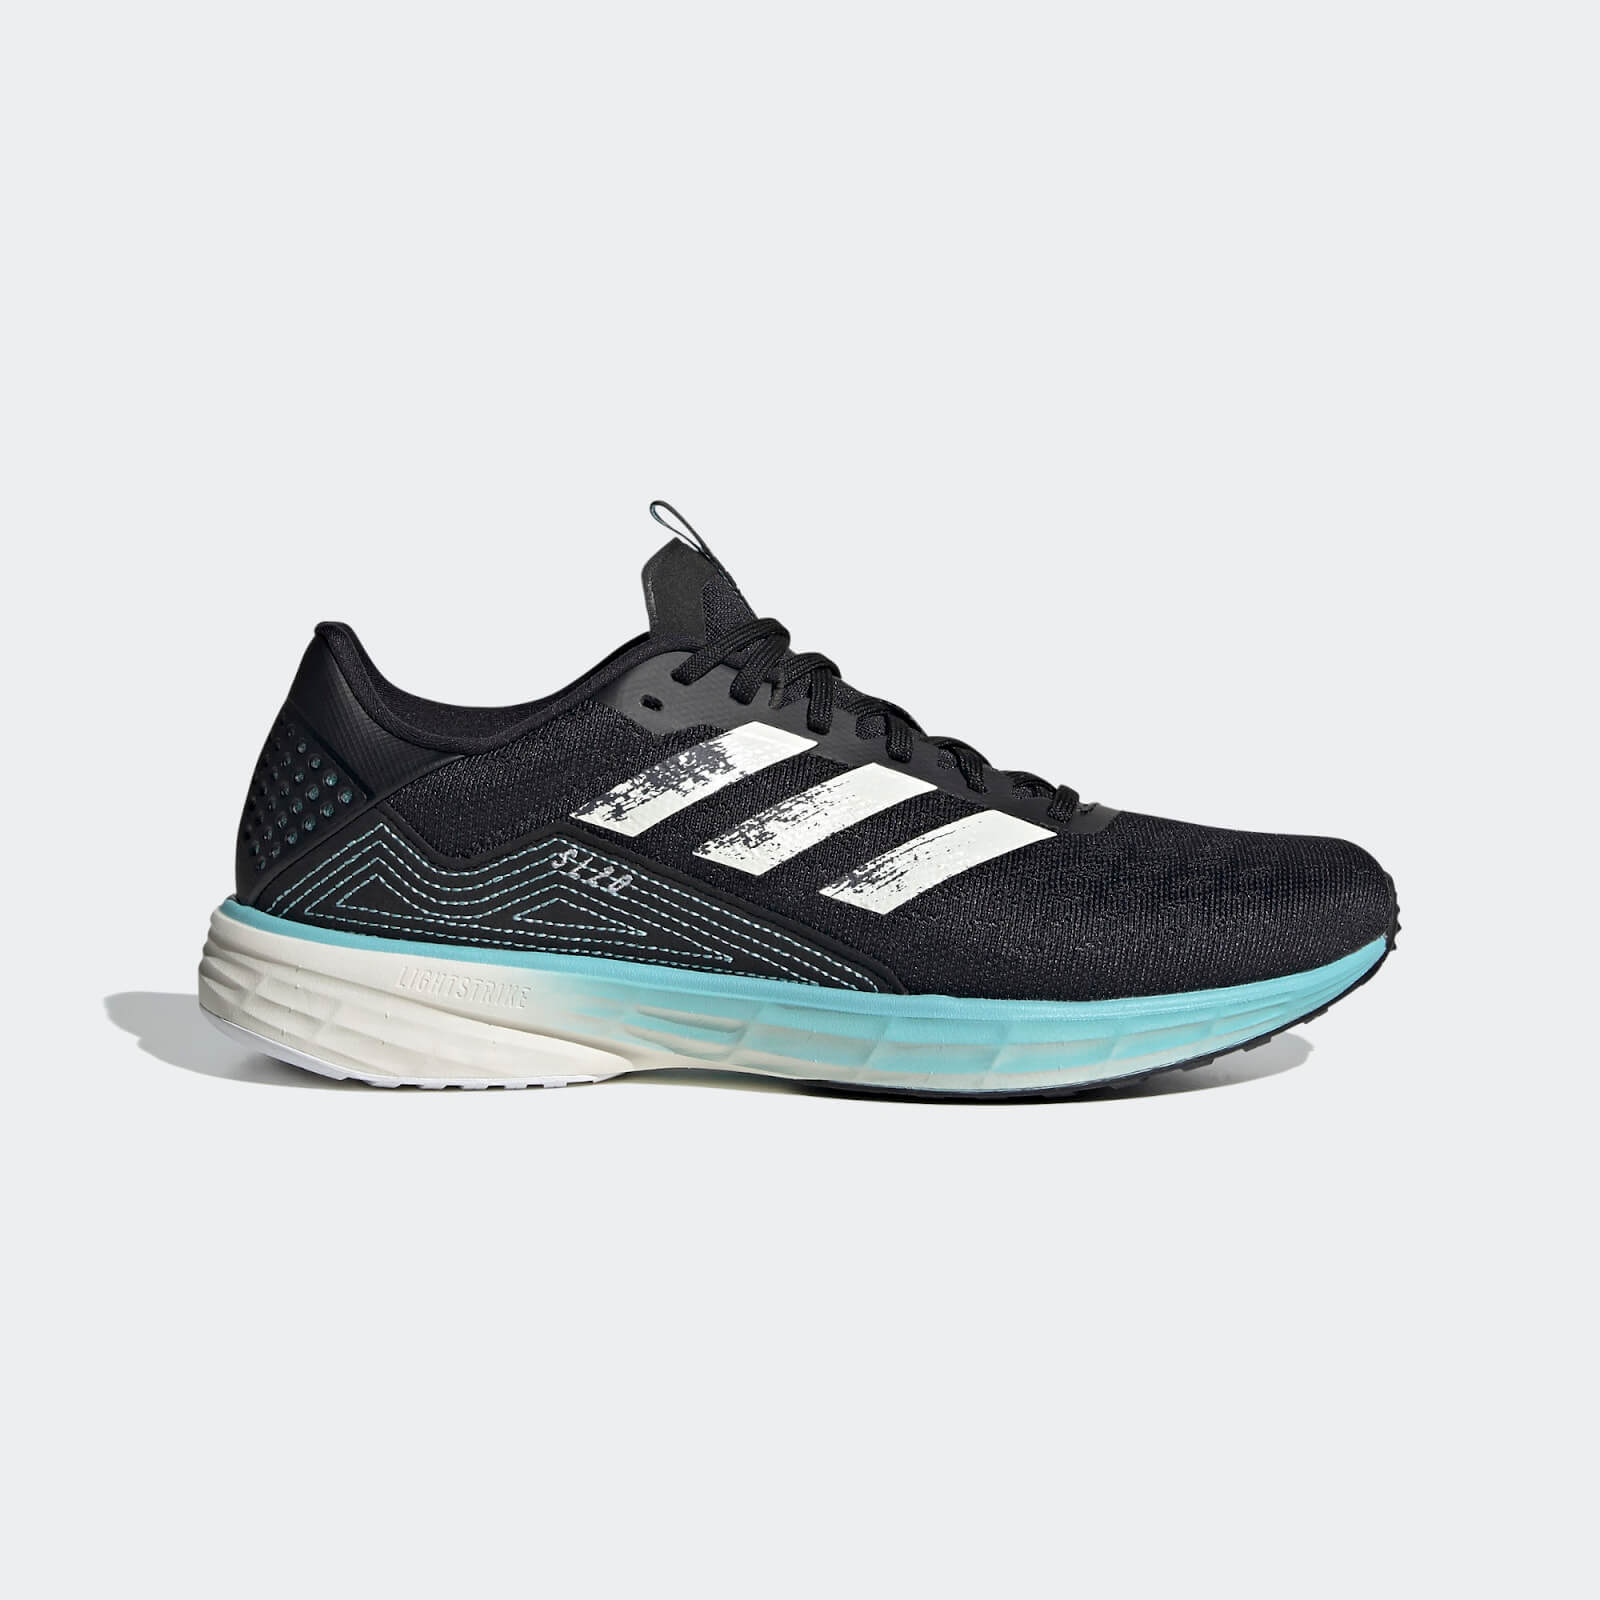 adidas SL20 PrimeBlue Running Shoes - Core Black/Chalk White/Blue Spirit - US 7.5/UK 7